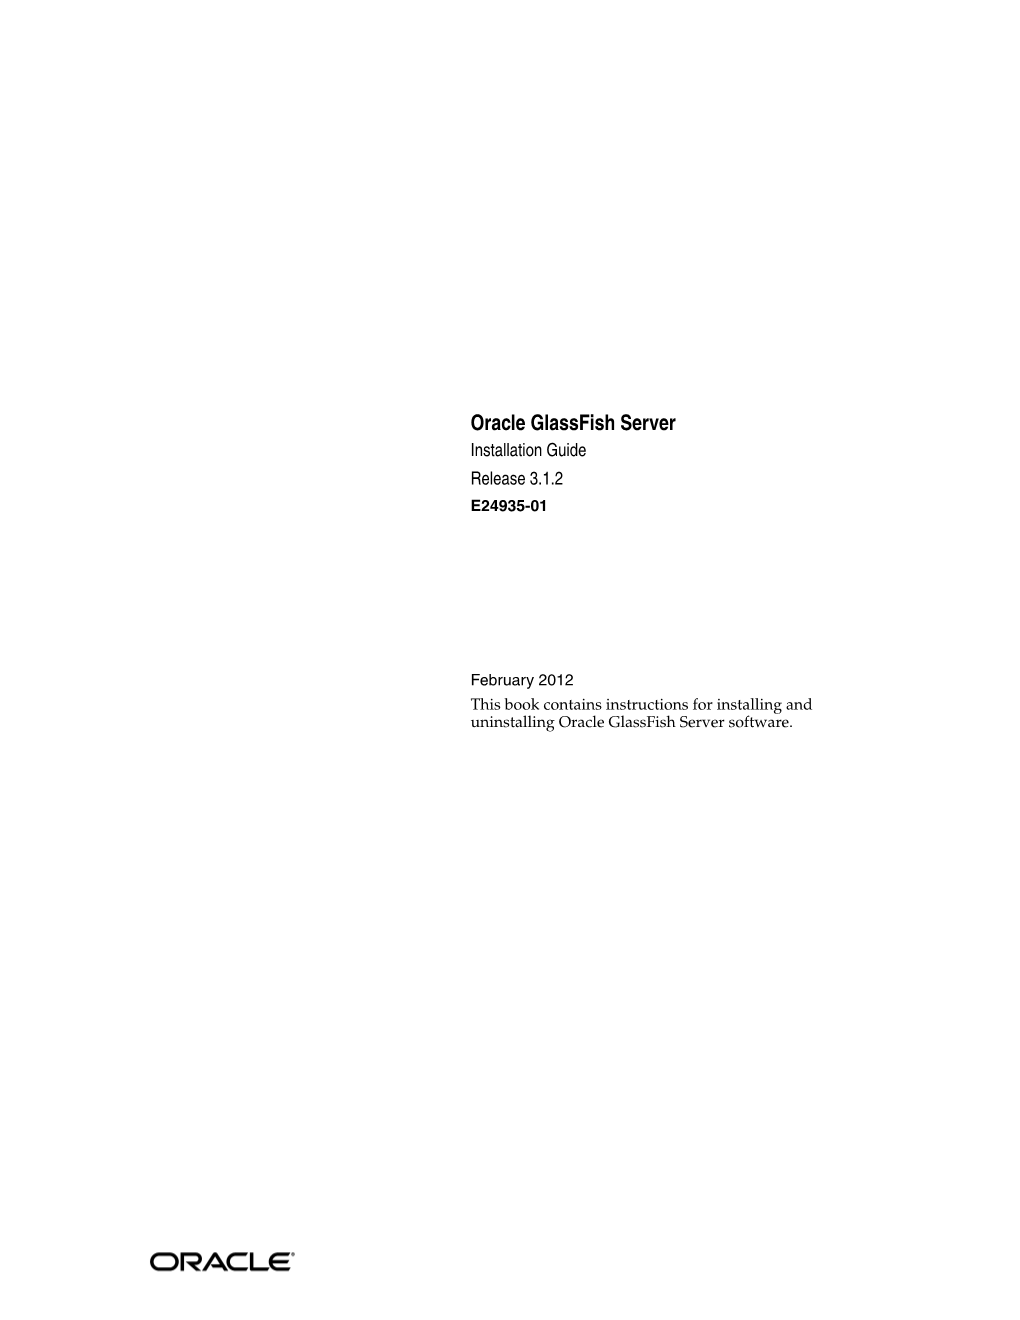 Oracle Glassfish Server Installation Guide Release 3.1.2 E24935-01